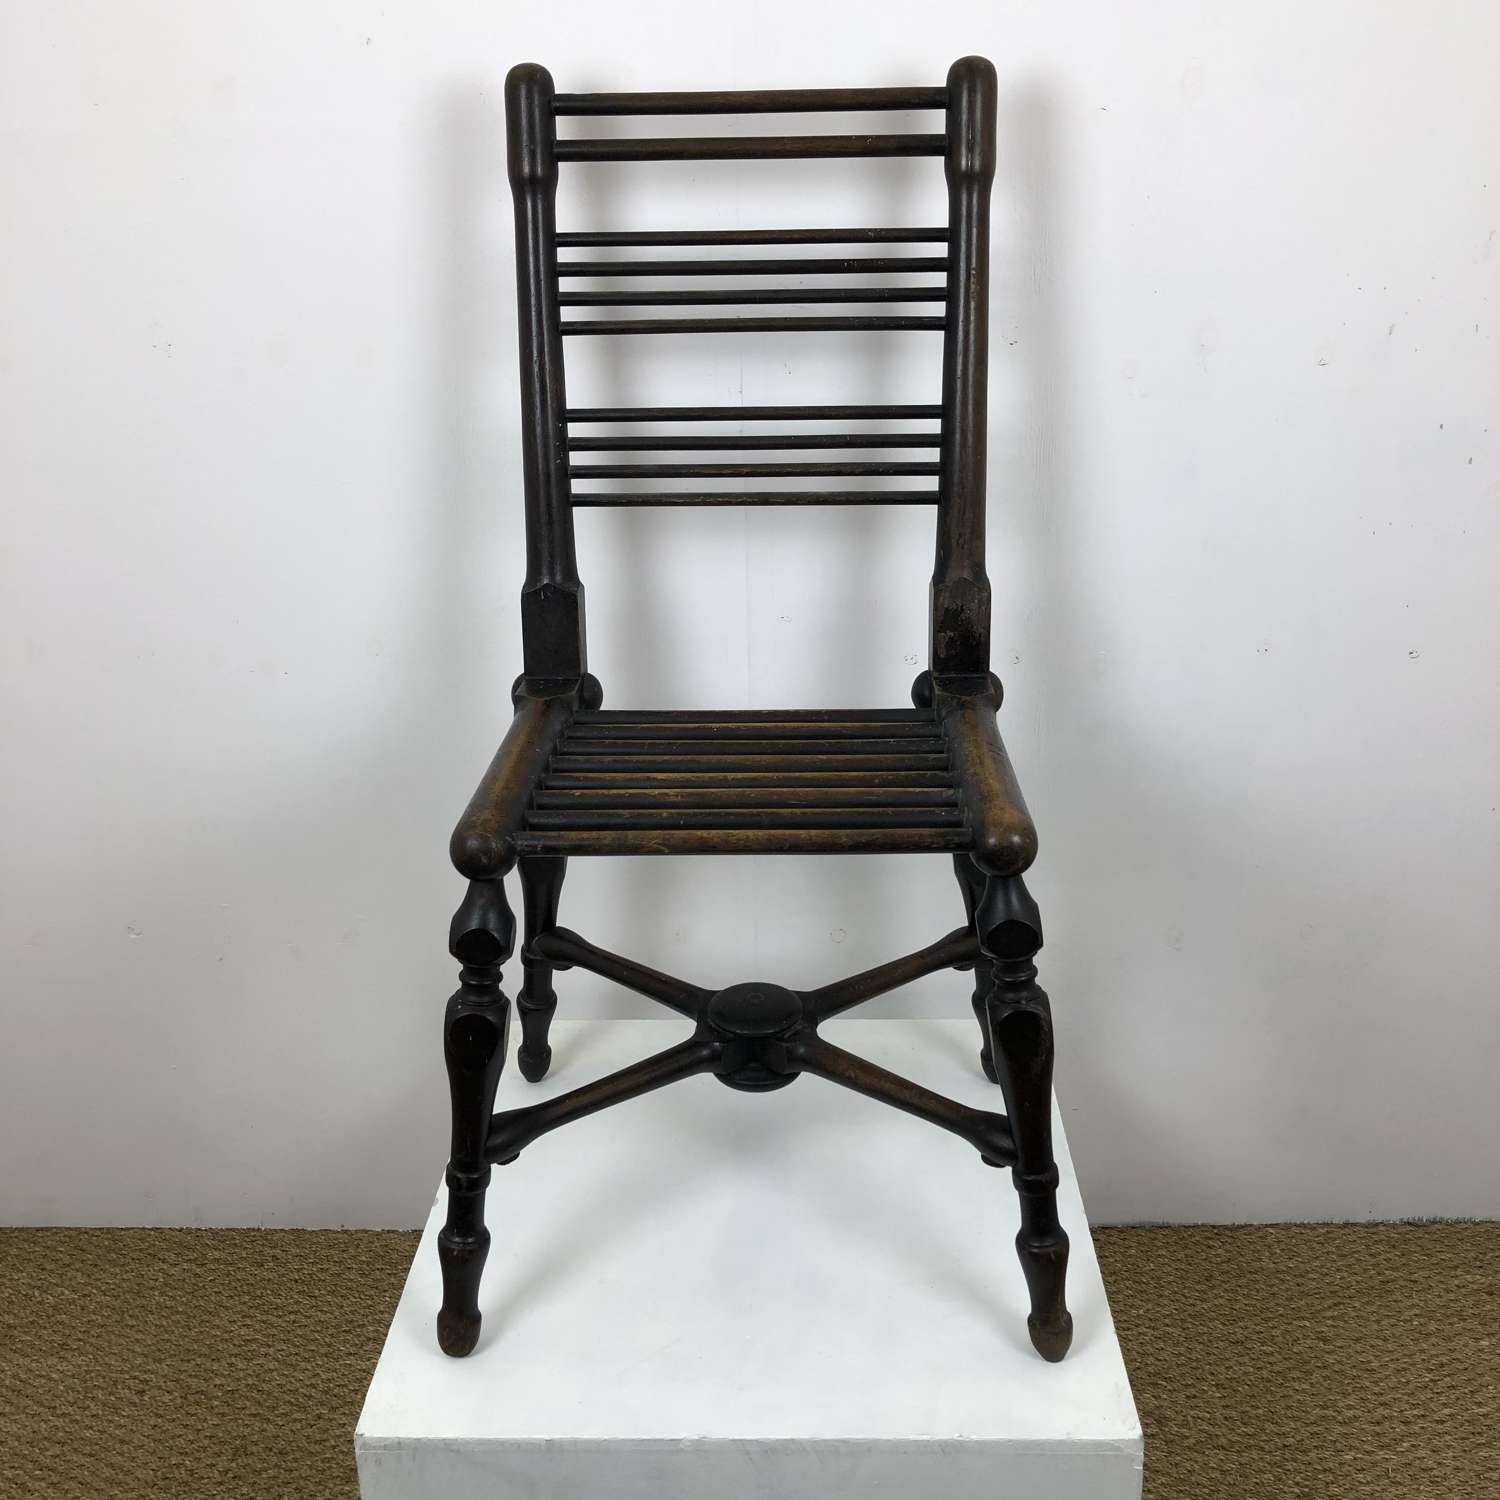 An Artist’s sitters chair